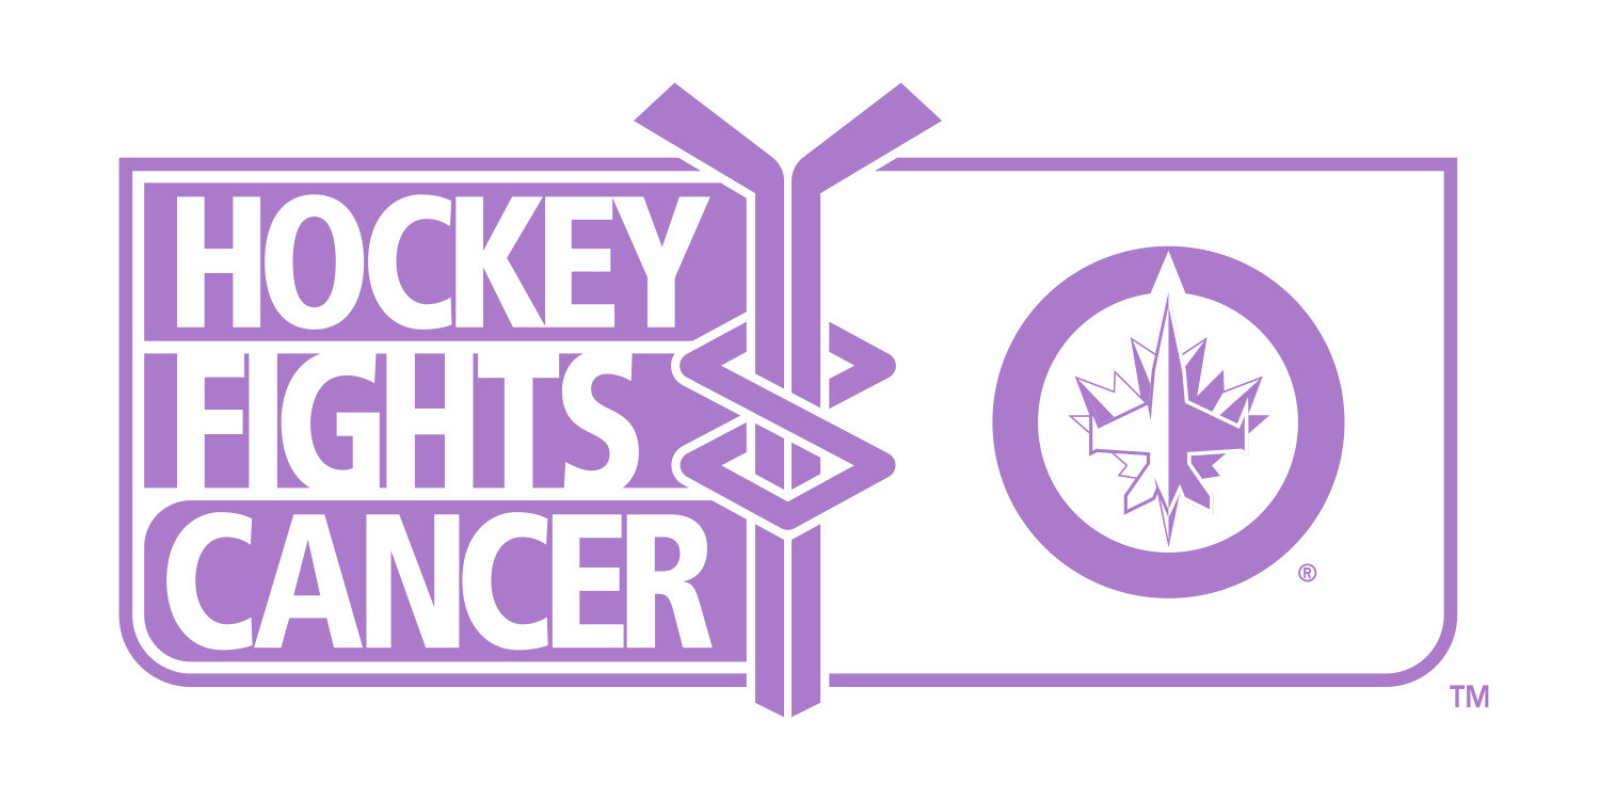 Winnipeg Jets Hockey Fights Cancer logo